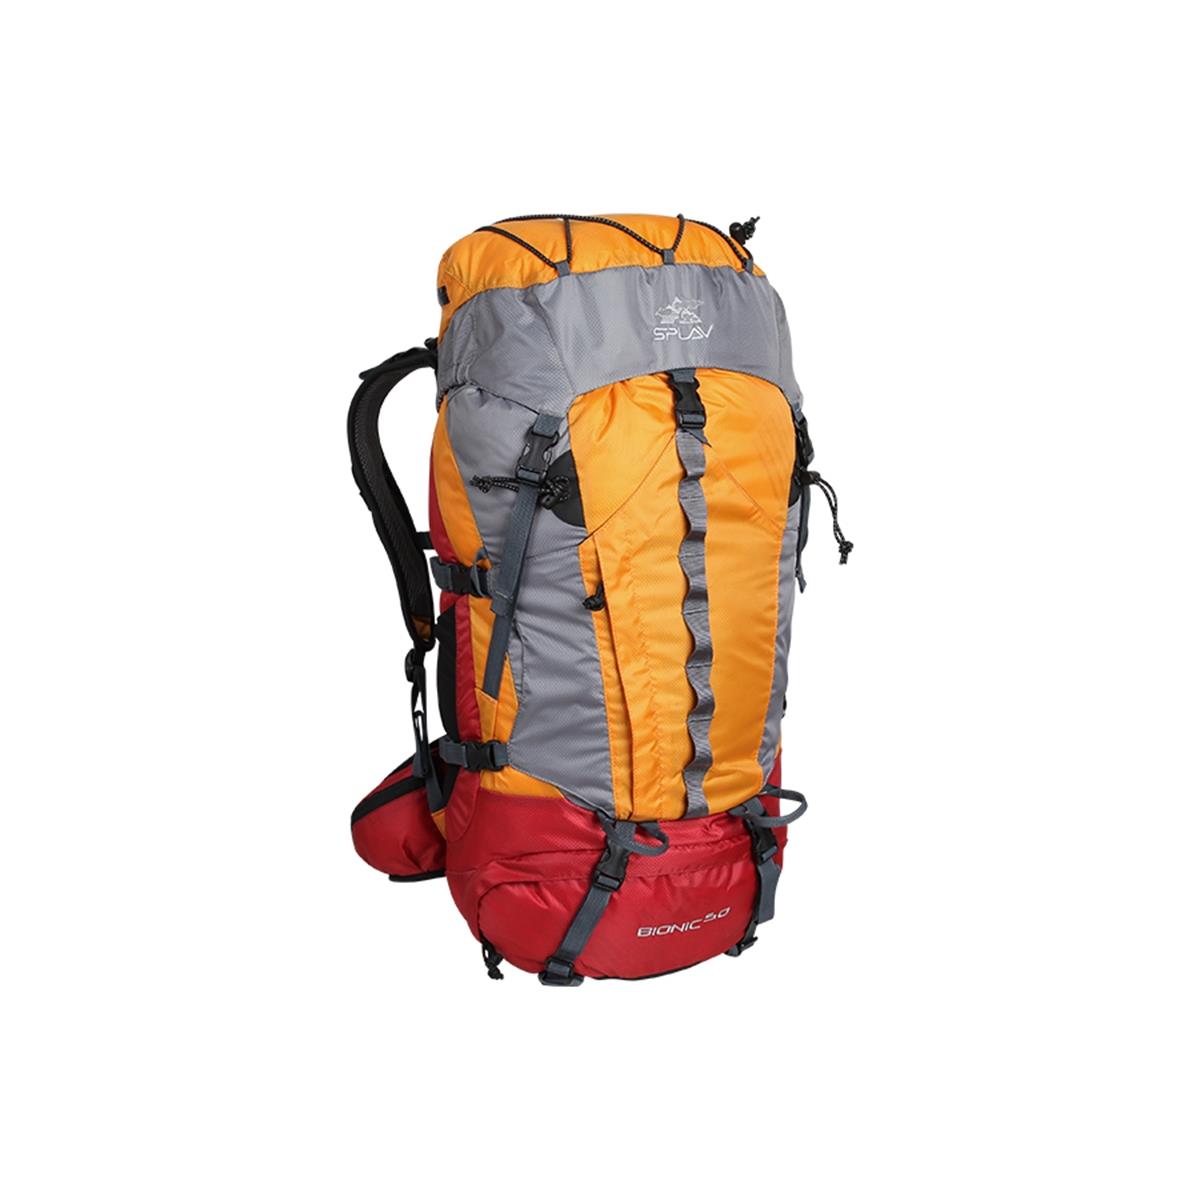 Рюкзак Bionic 50 оранжевый СПЛАВ рюкзак putin team 29 x 13 x 44 см отд на молнии н карман голубой